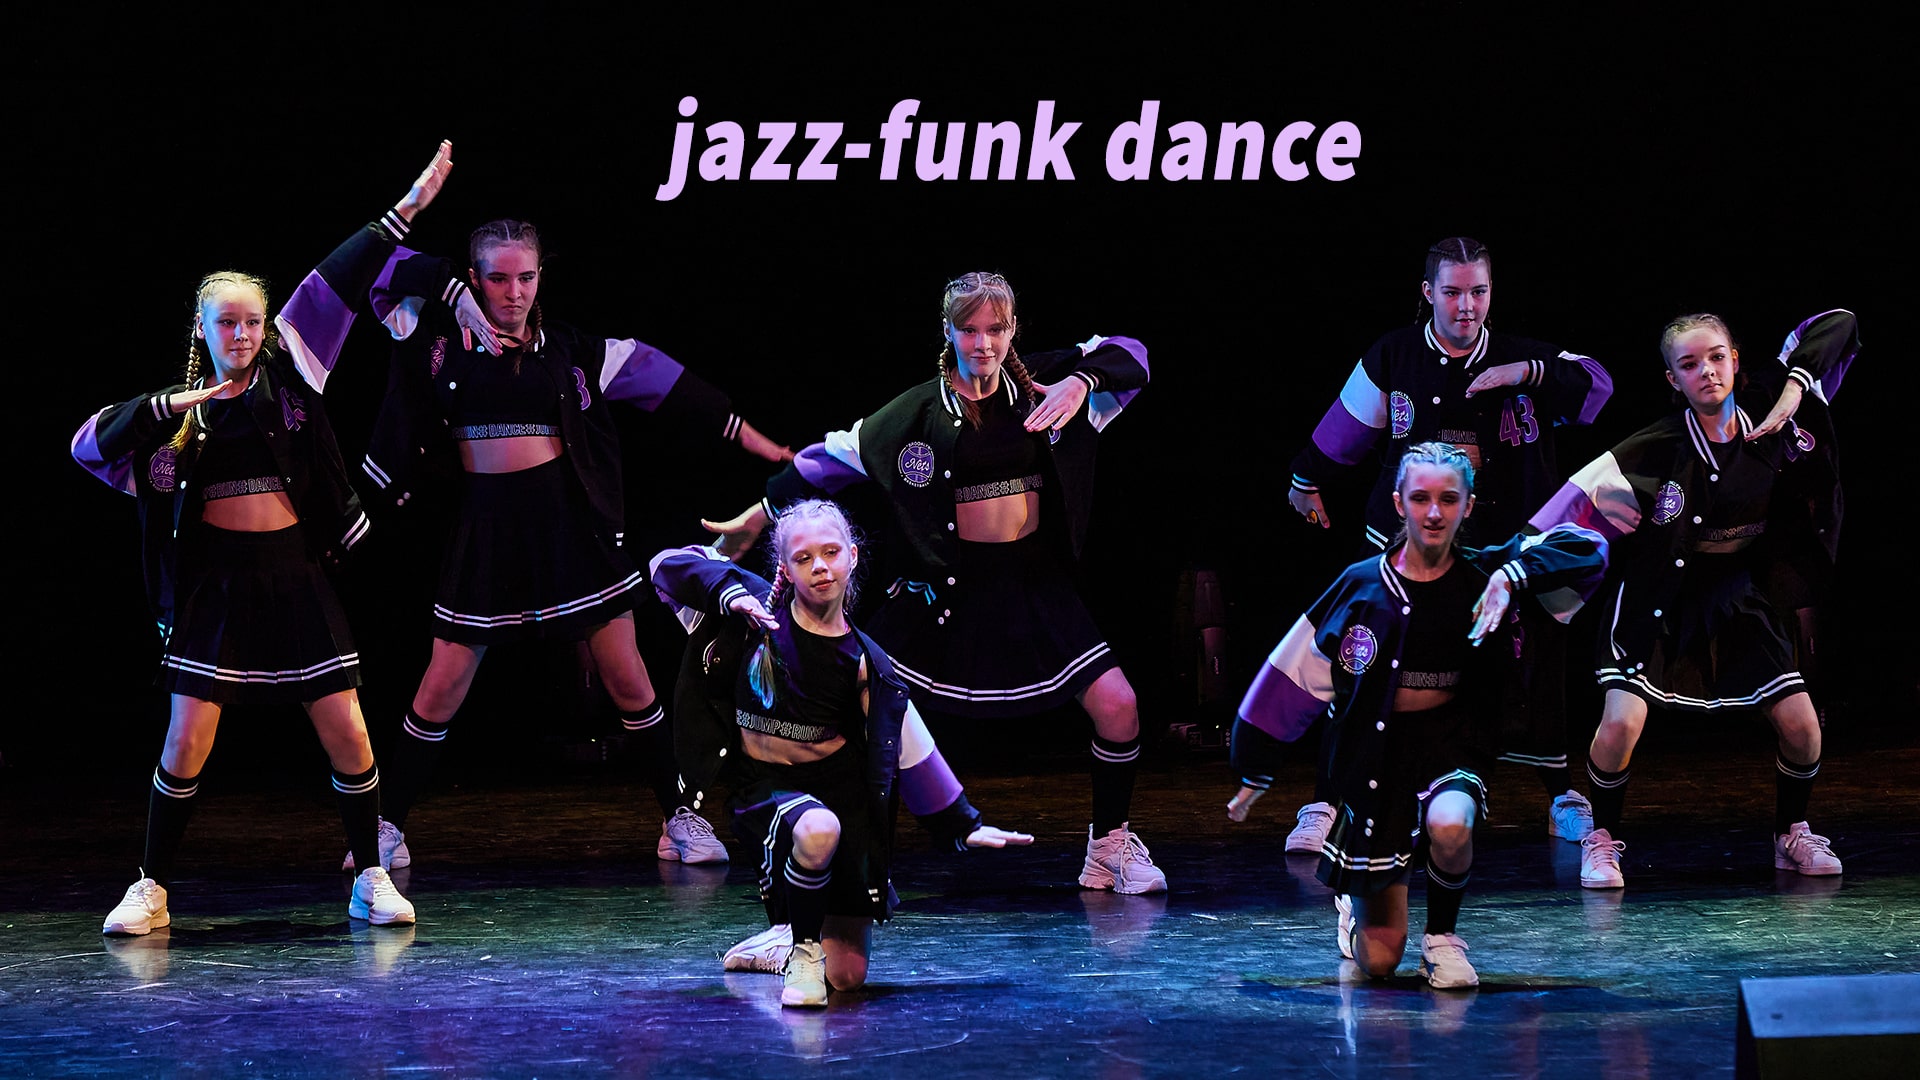 Don't stop jazz-funk танцевальная студия Divadance